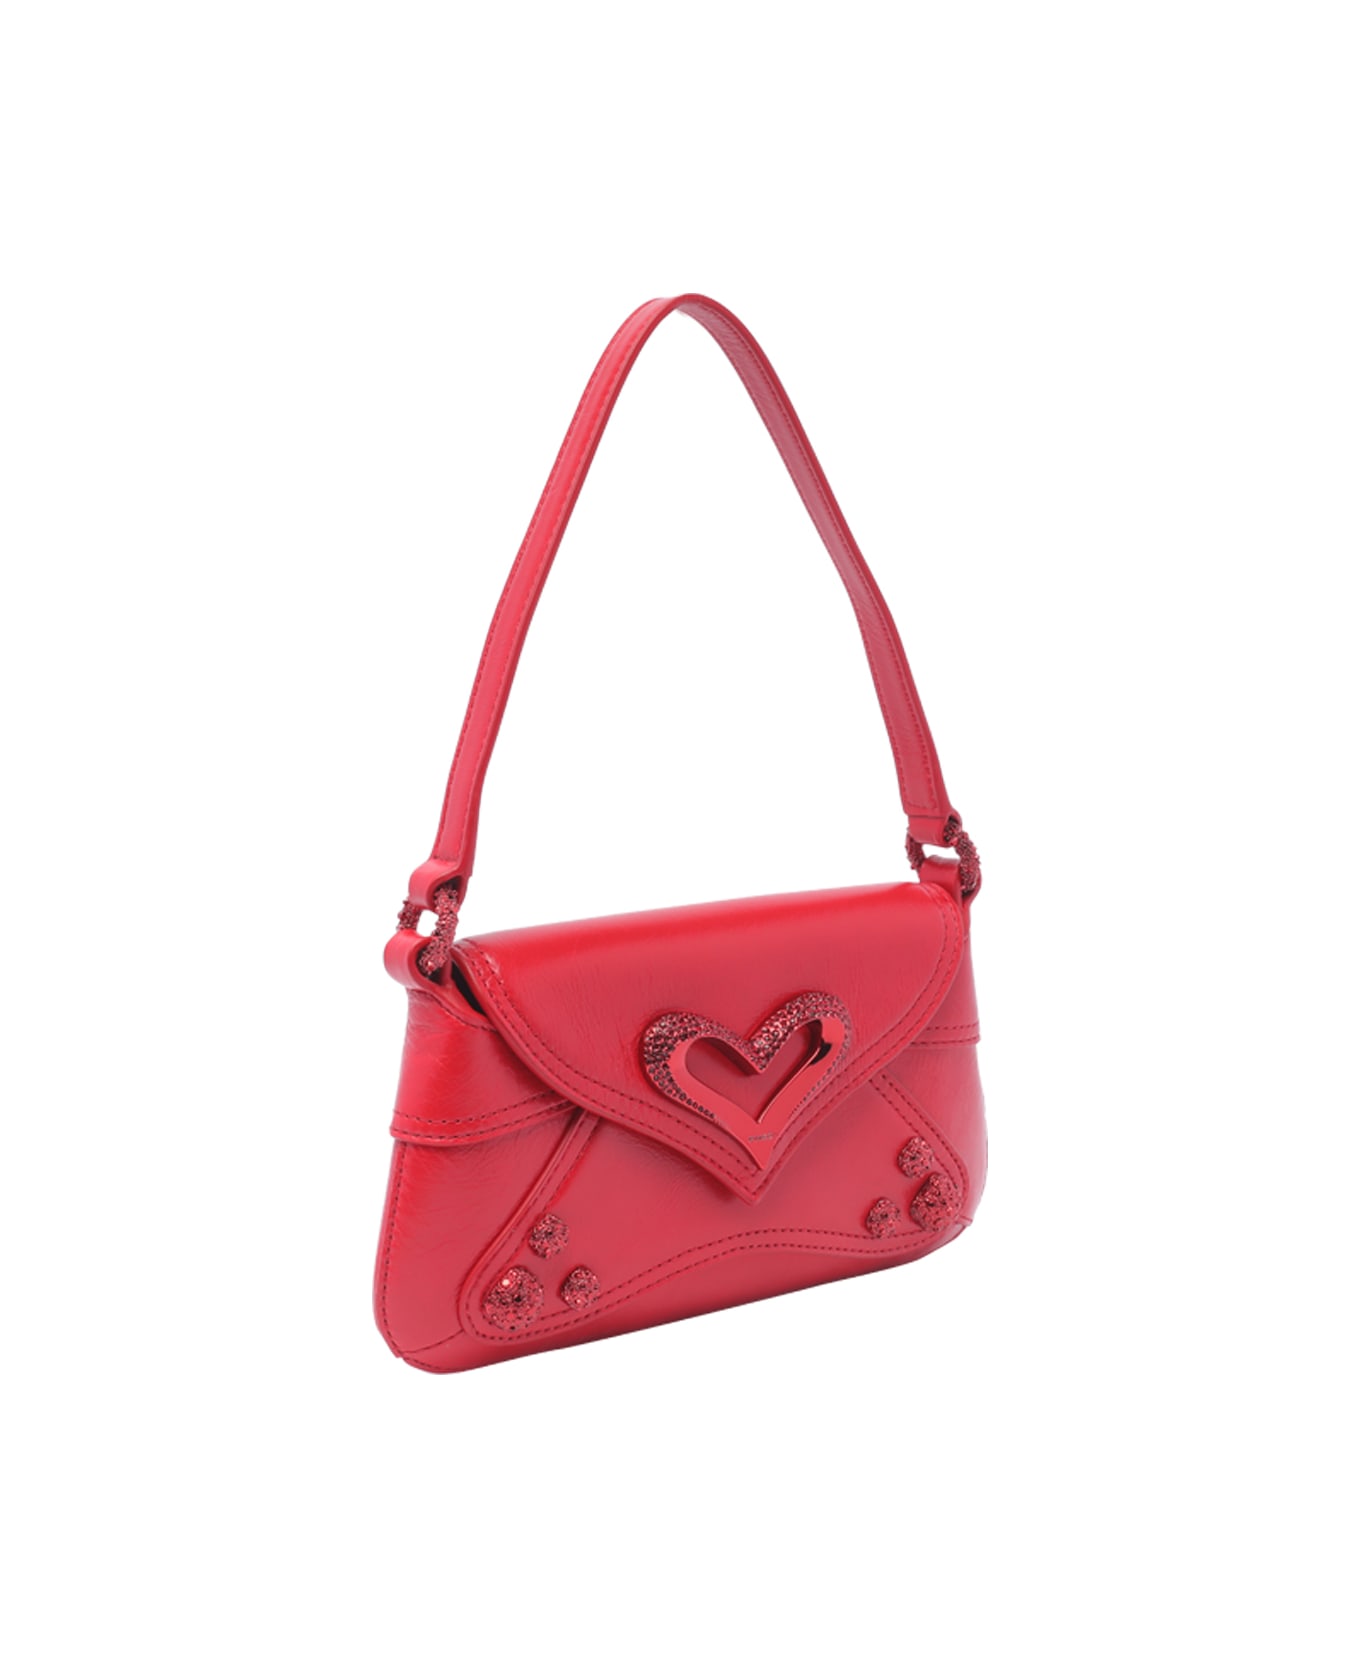 Pinko 520 Baby Shoulder Bag - Red